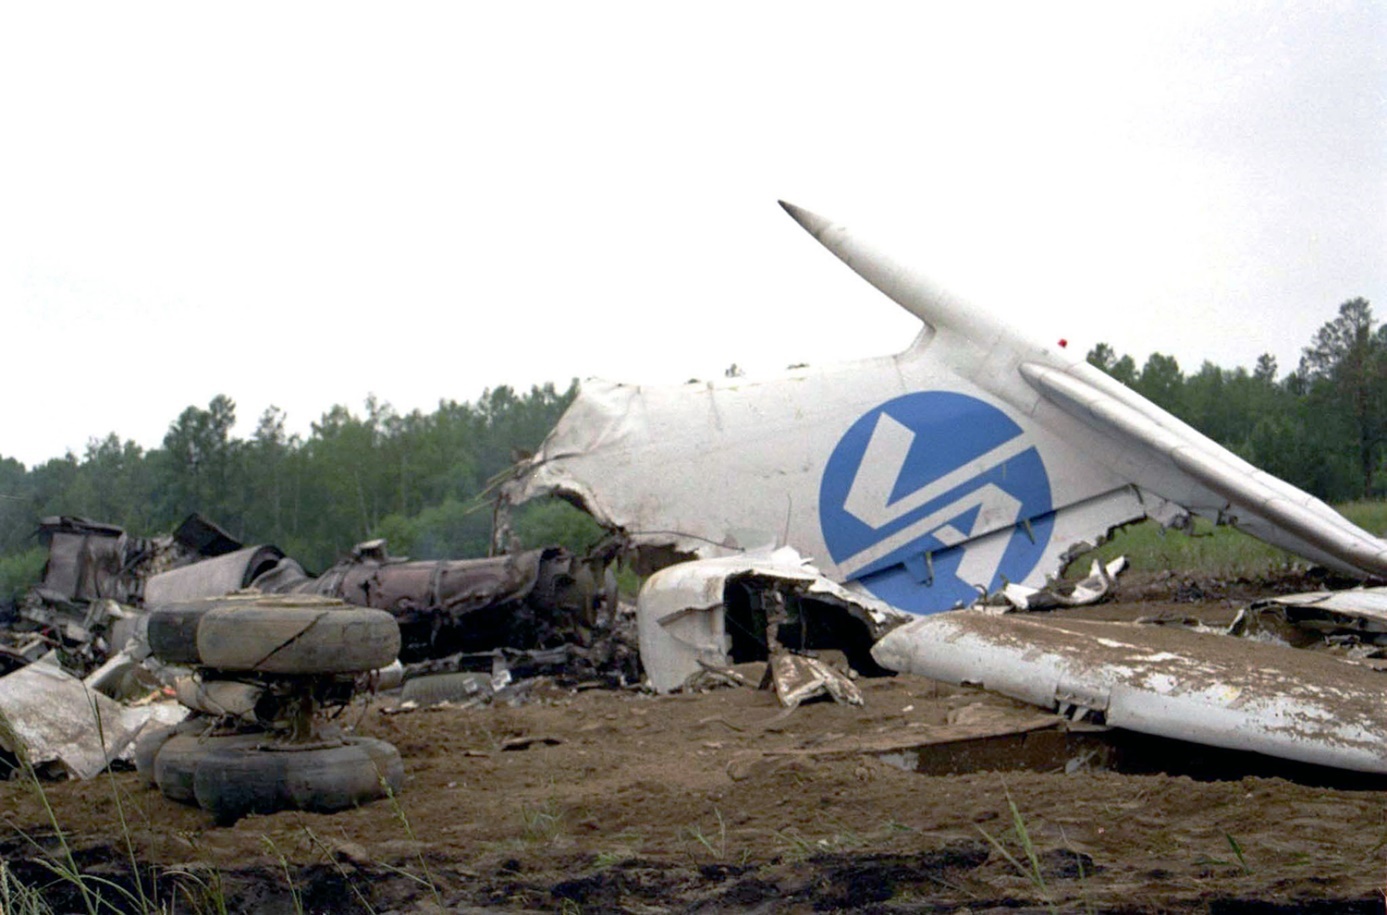 Tupolew Tu-154M | Vladivostokavia | RA-85845 | crash site picture showing tail and main landing gear